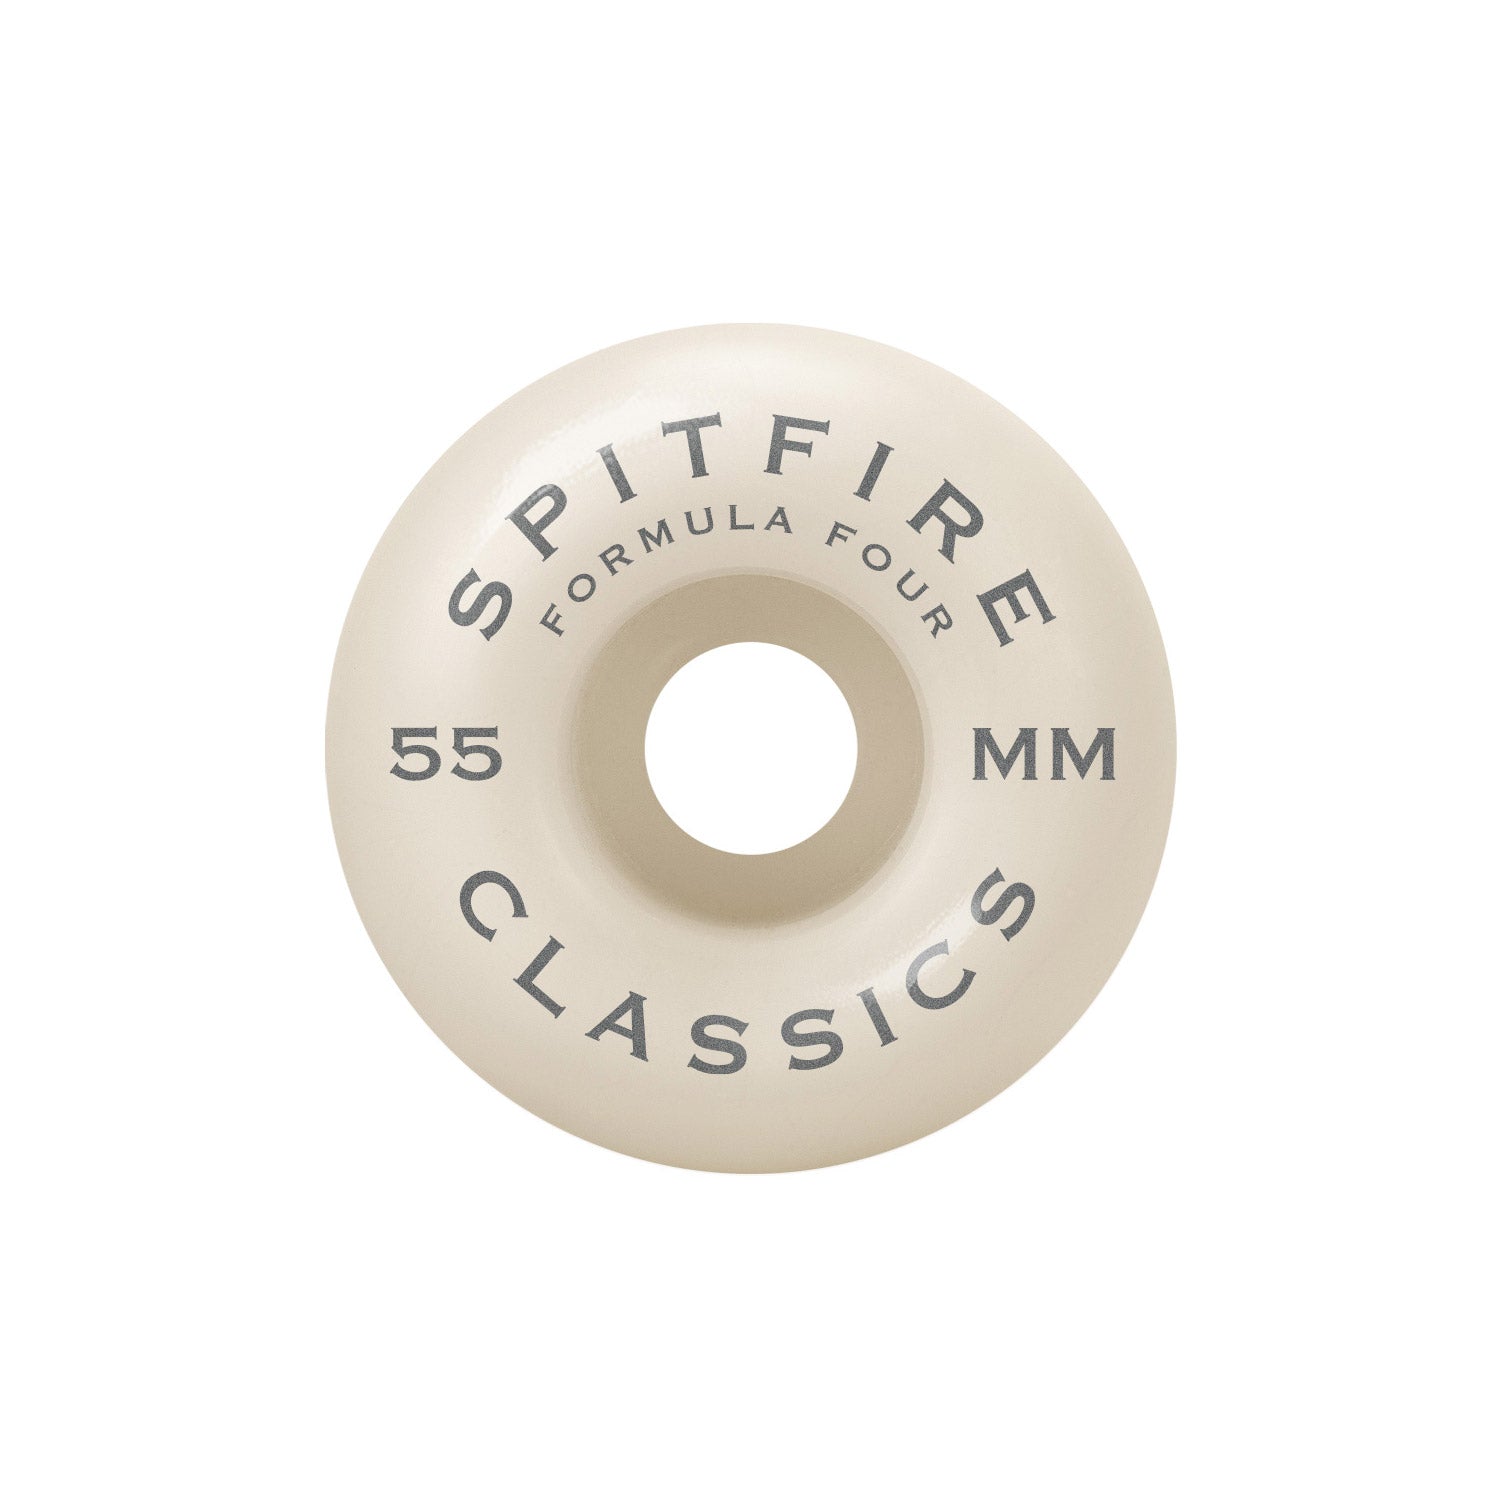 Spitfire Formula Four Classics wheel (99A, 55mm) - Tiki Room Skateboards - 2